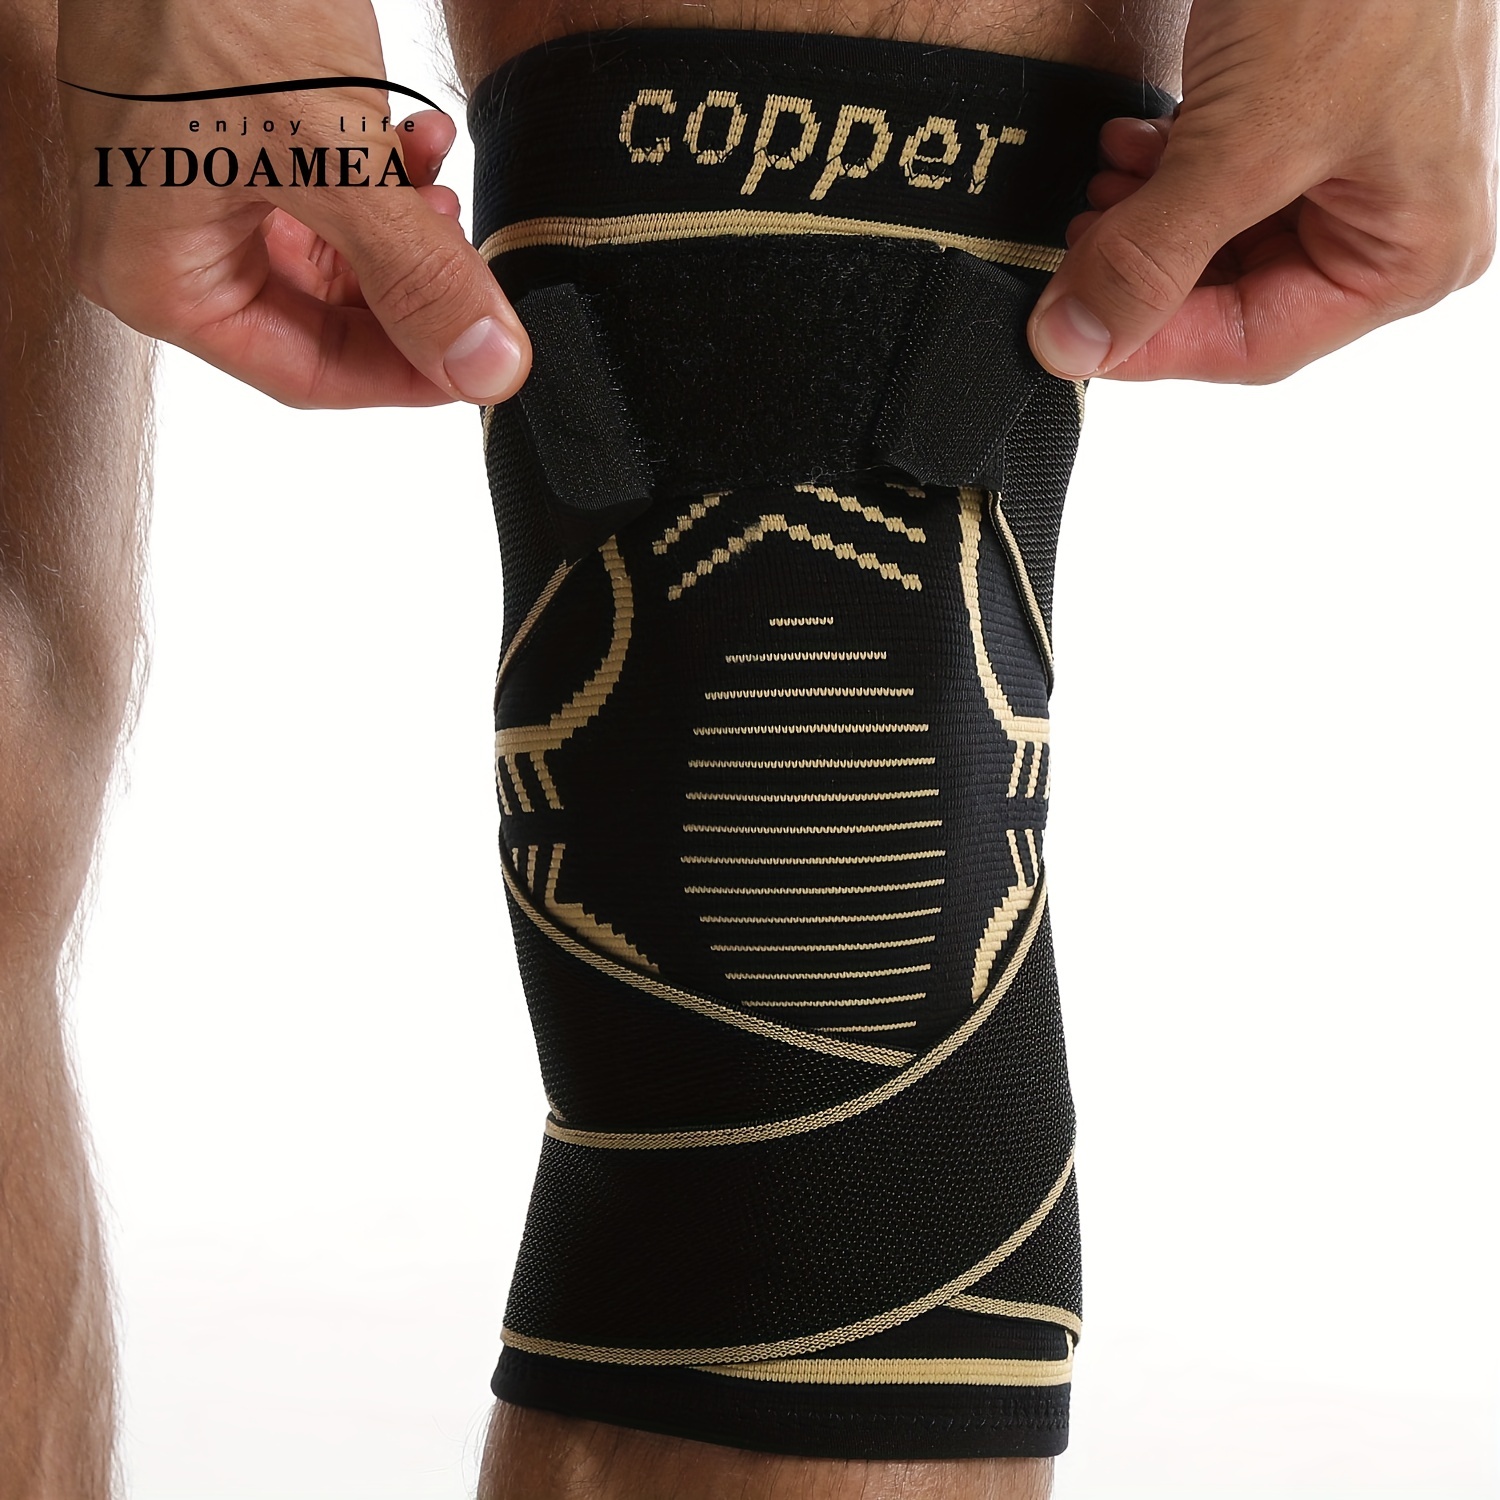 Professional Copper Knee Brace(New Version) - Knee Compression